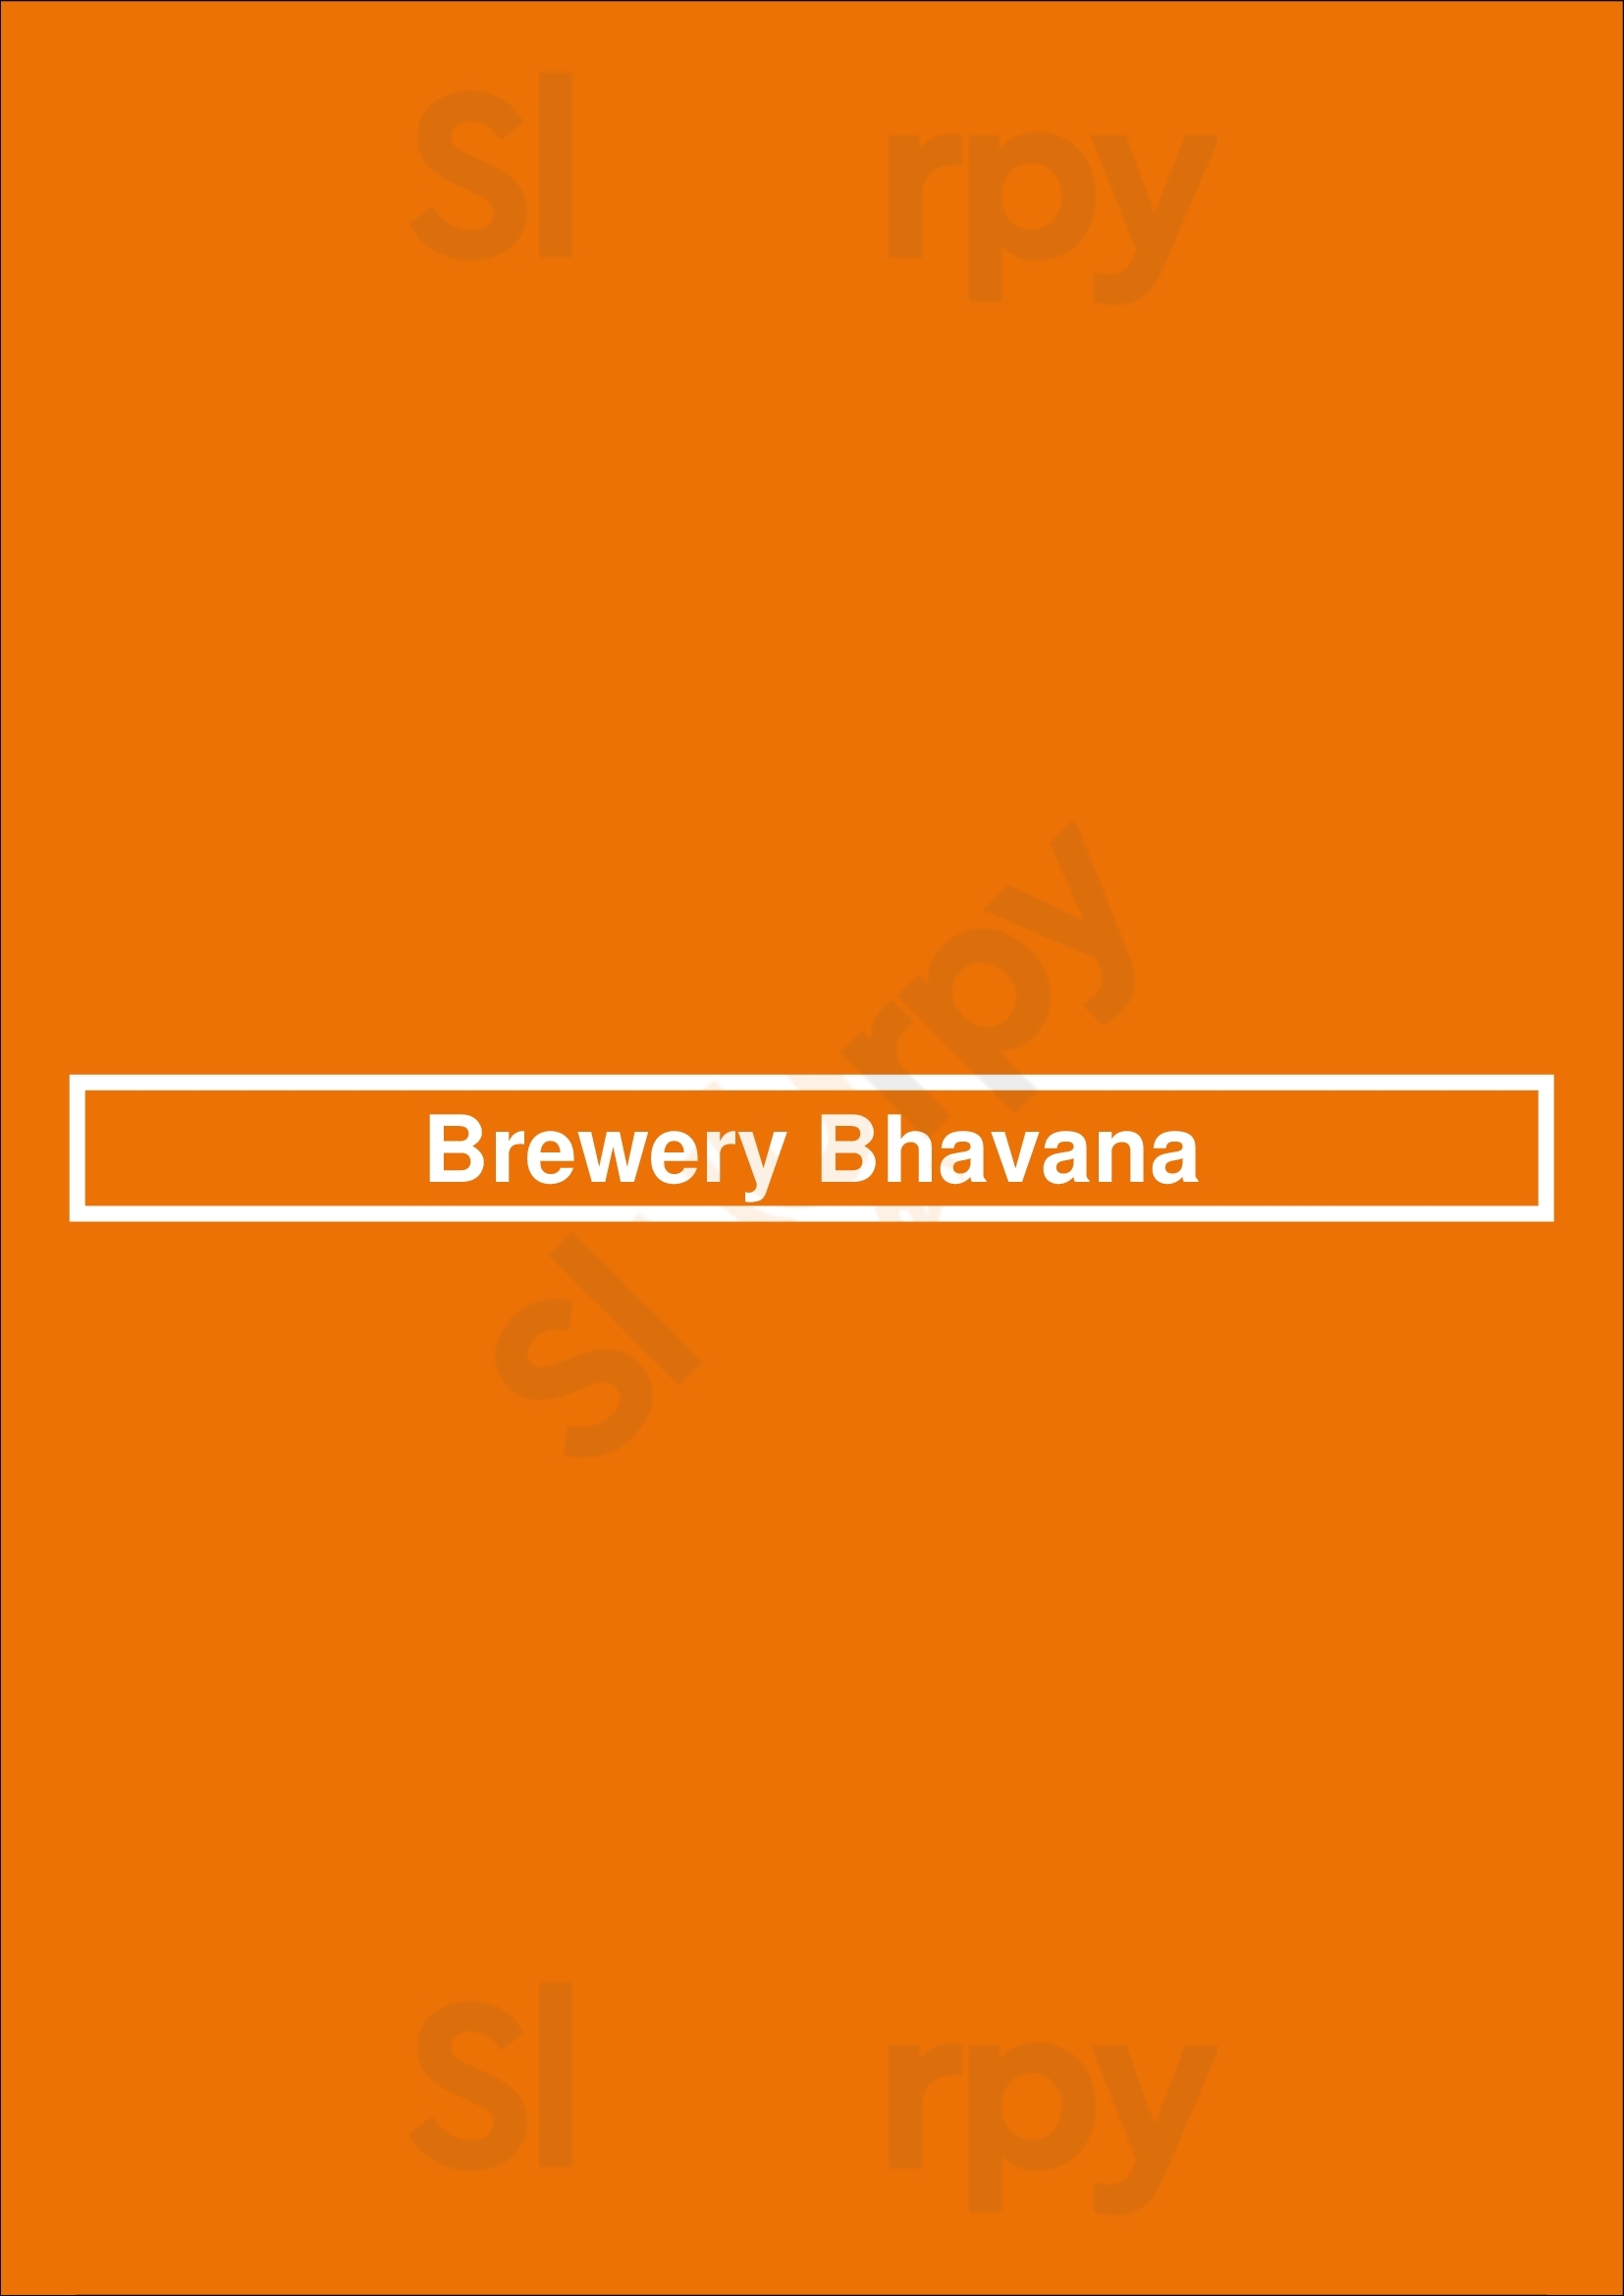 Brewery Bhavana Raleigh Menu - 1